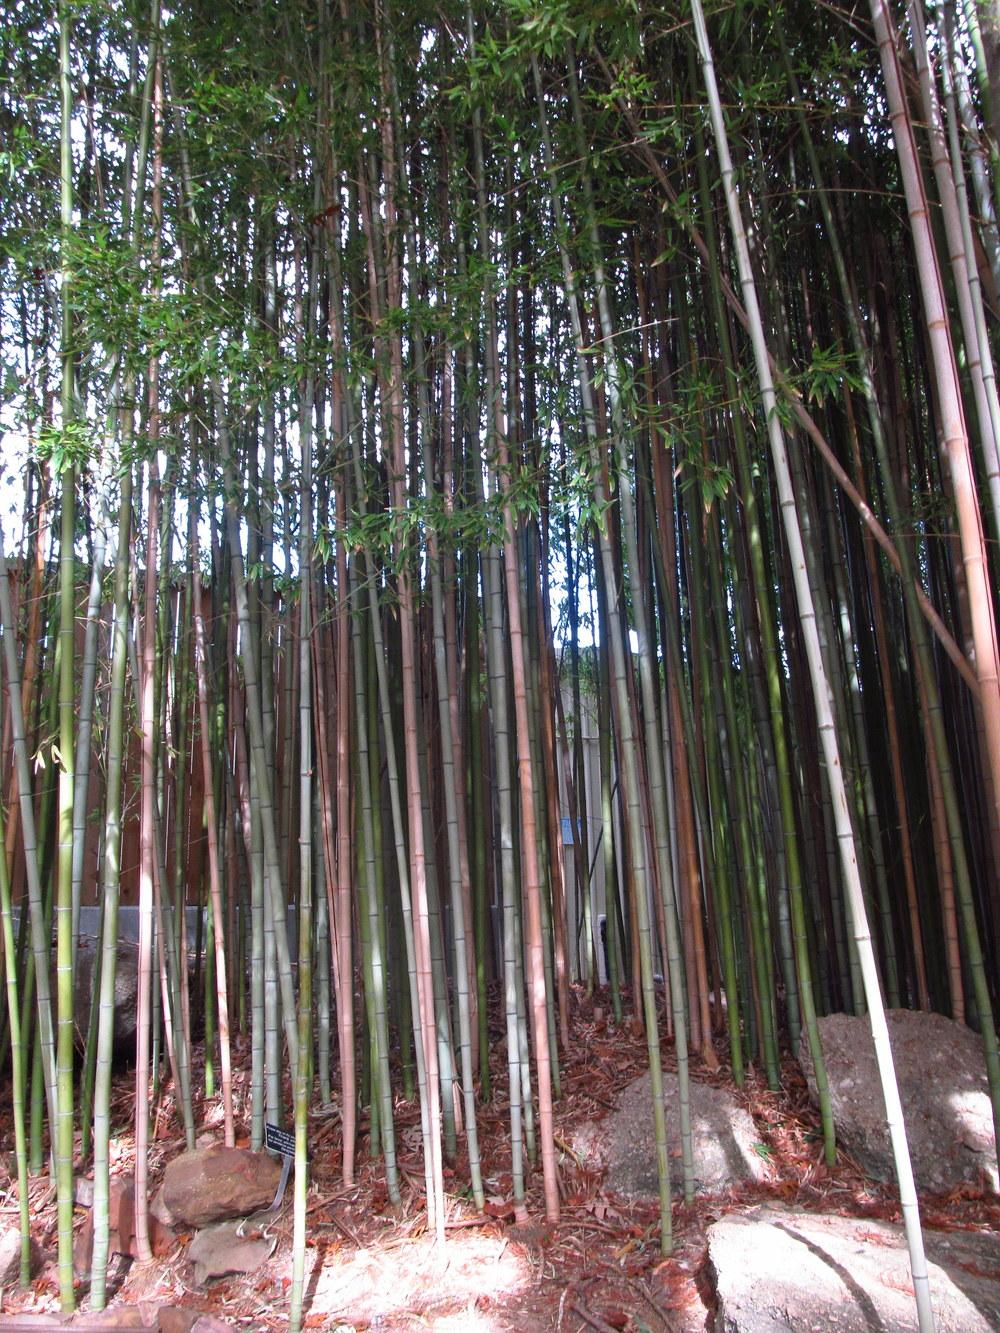 Photo of Bamboo (Bambusa) uploaded by jmorth